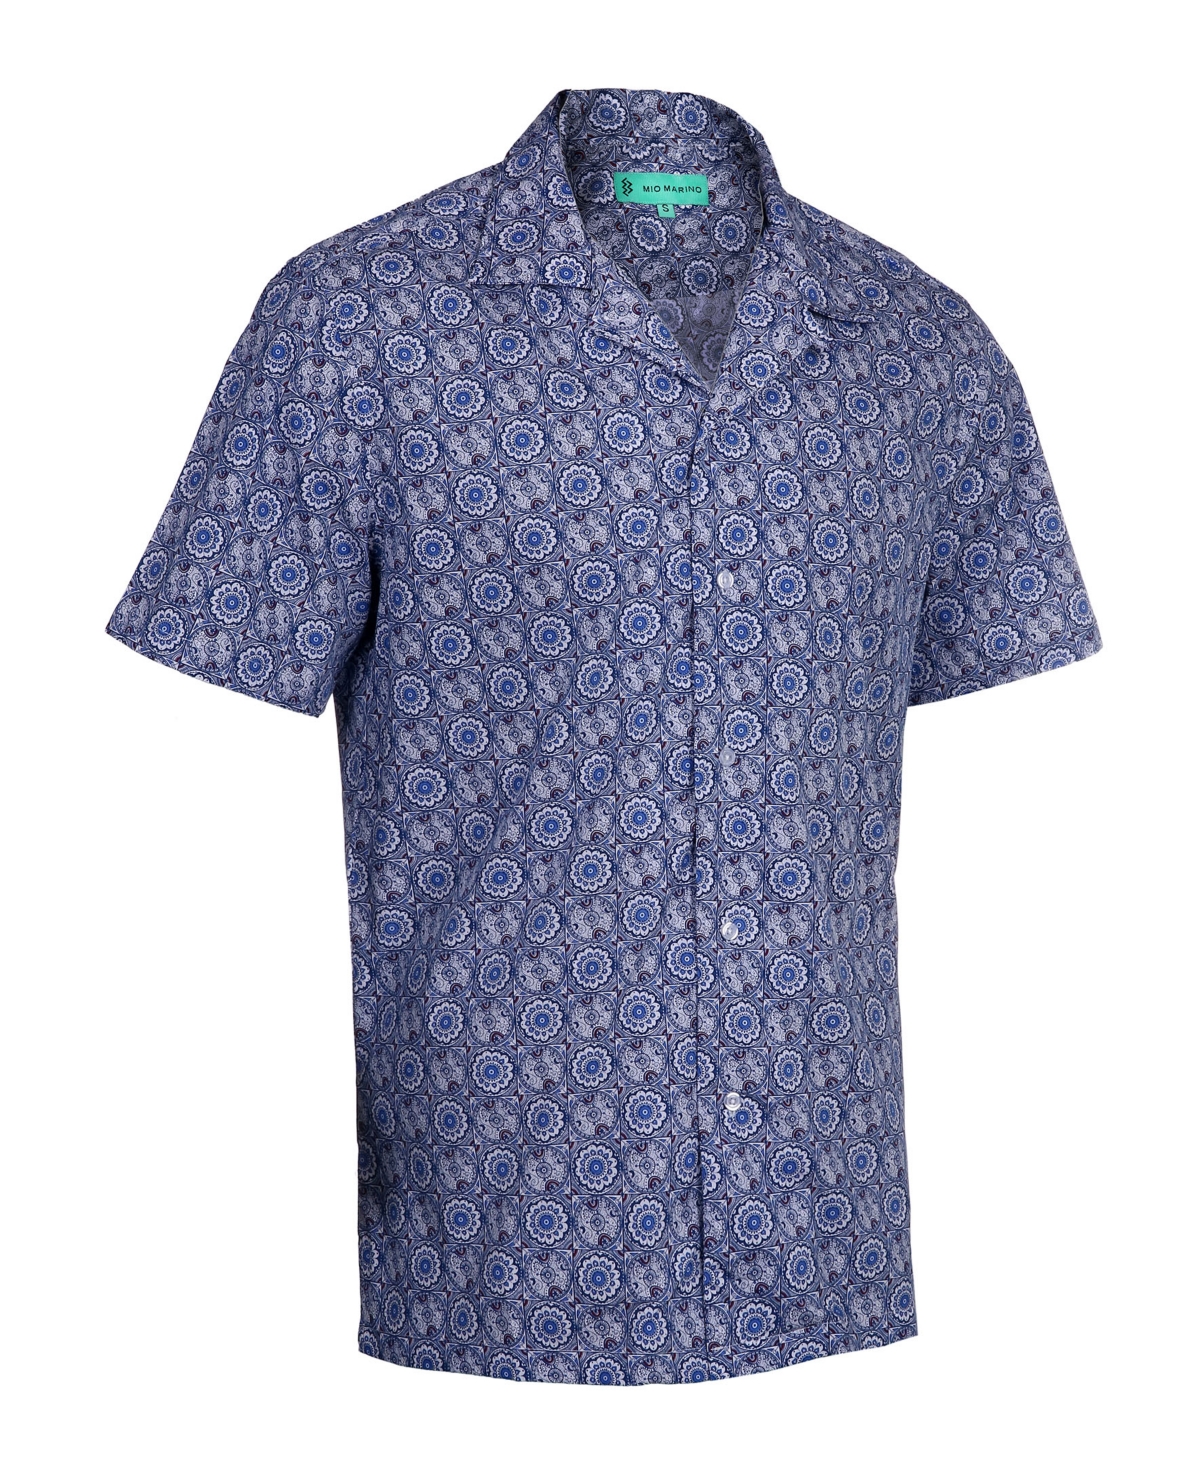 Men's Hawaiian Print Cotton Dress Shirts - Royal Blue